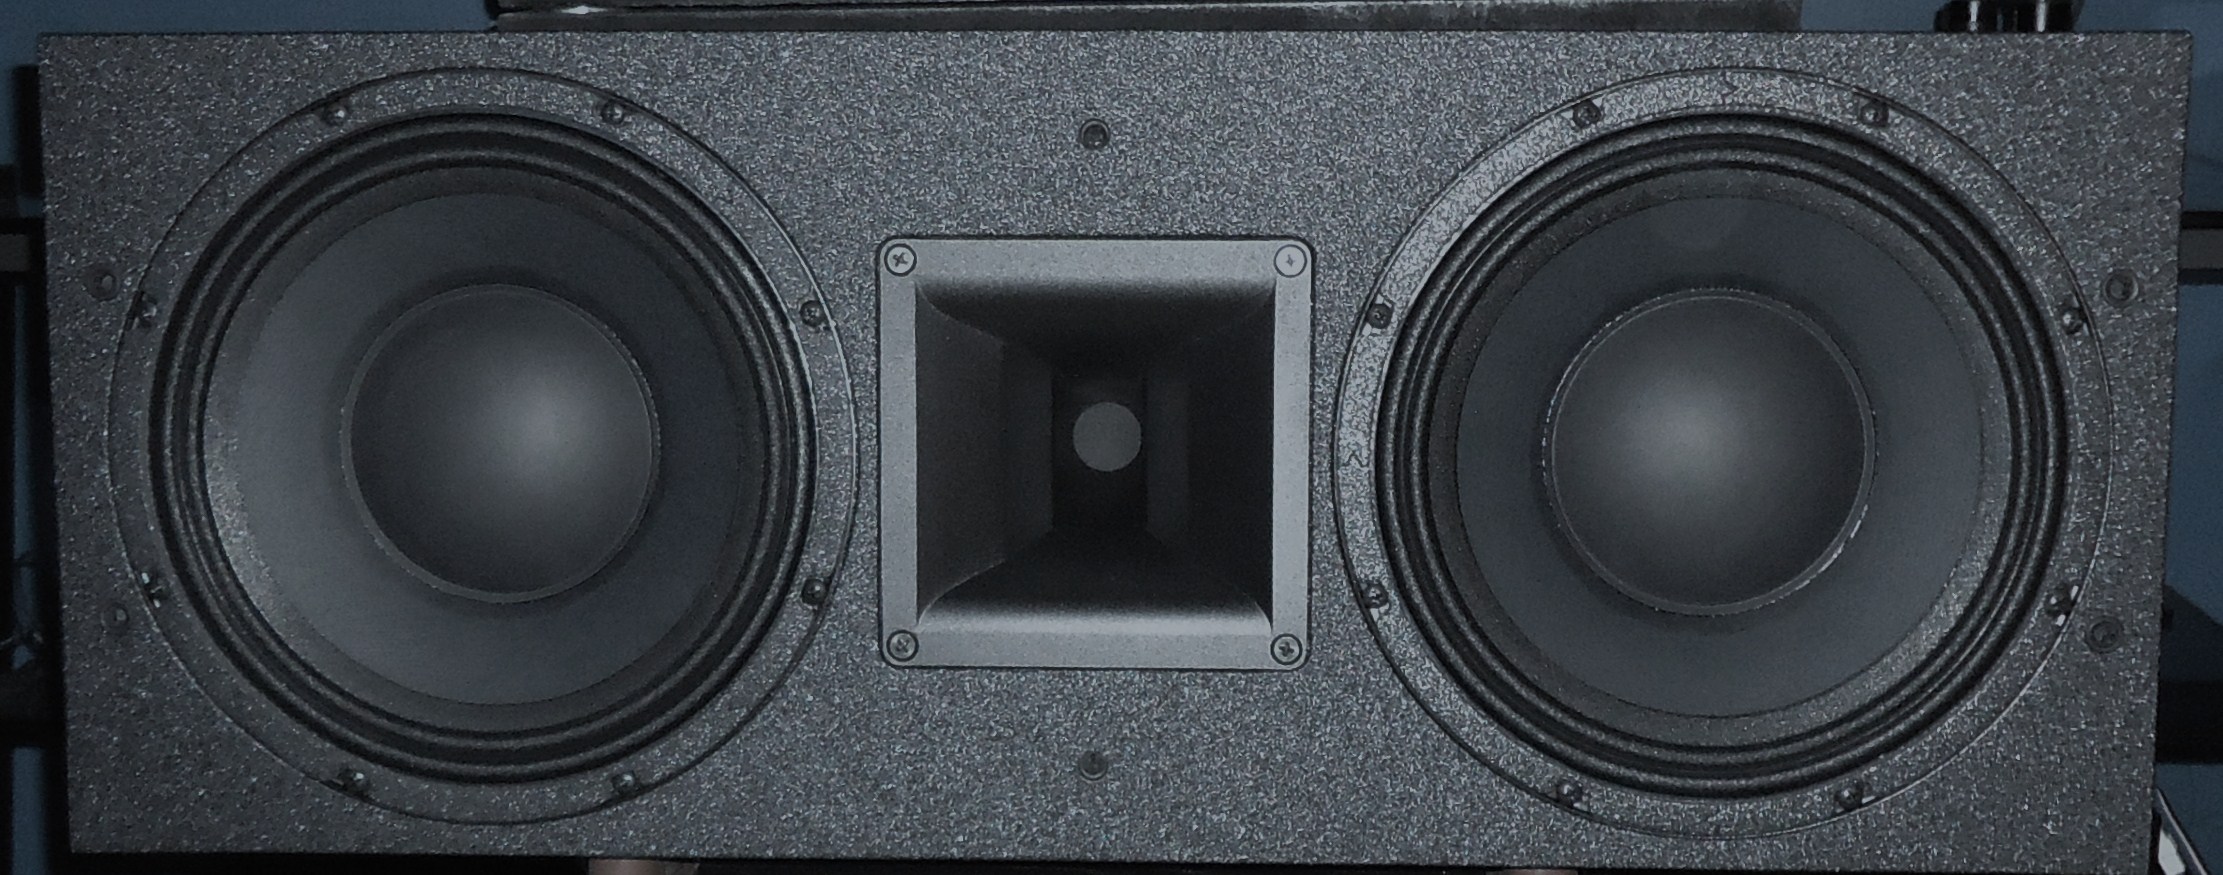 psa speakers 004.JPG